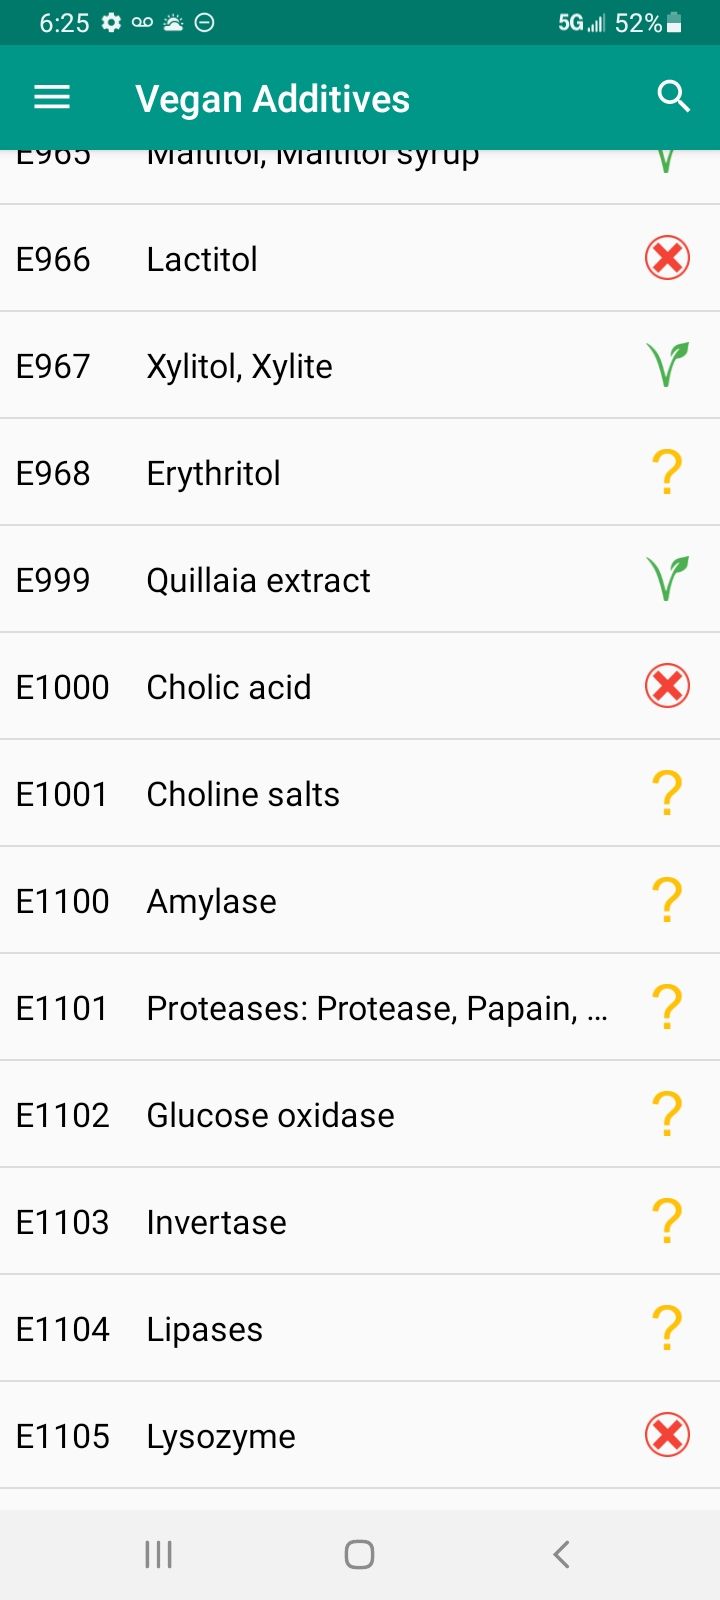 Non-vegan ingredients on the Vegan Additives app.